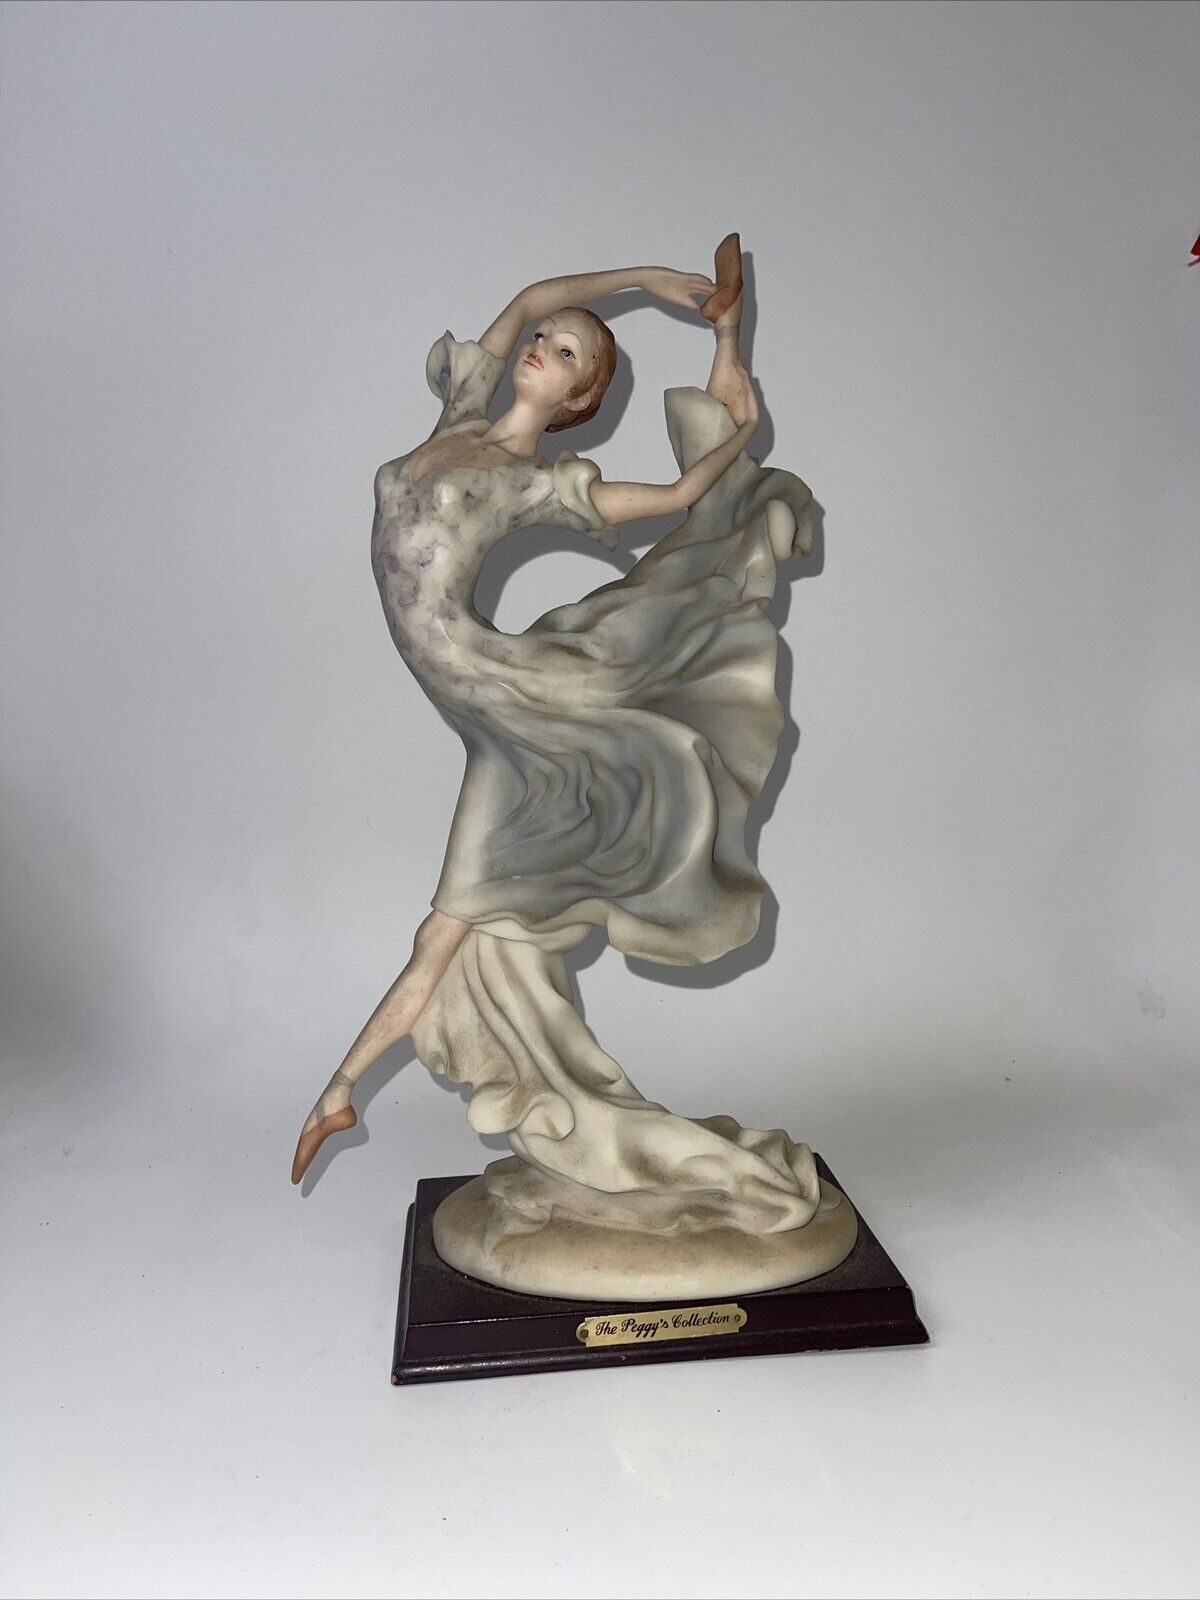 Vintage Peggy's Collection. Beautiful Ballet Dancer Large Figurine. Rare Find.